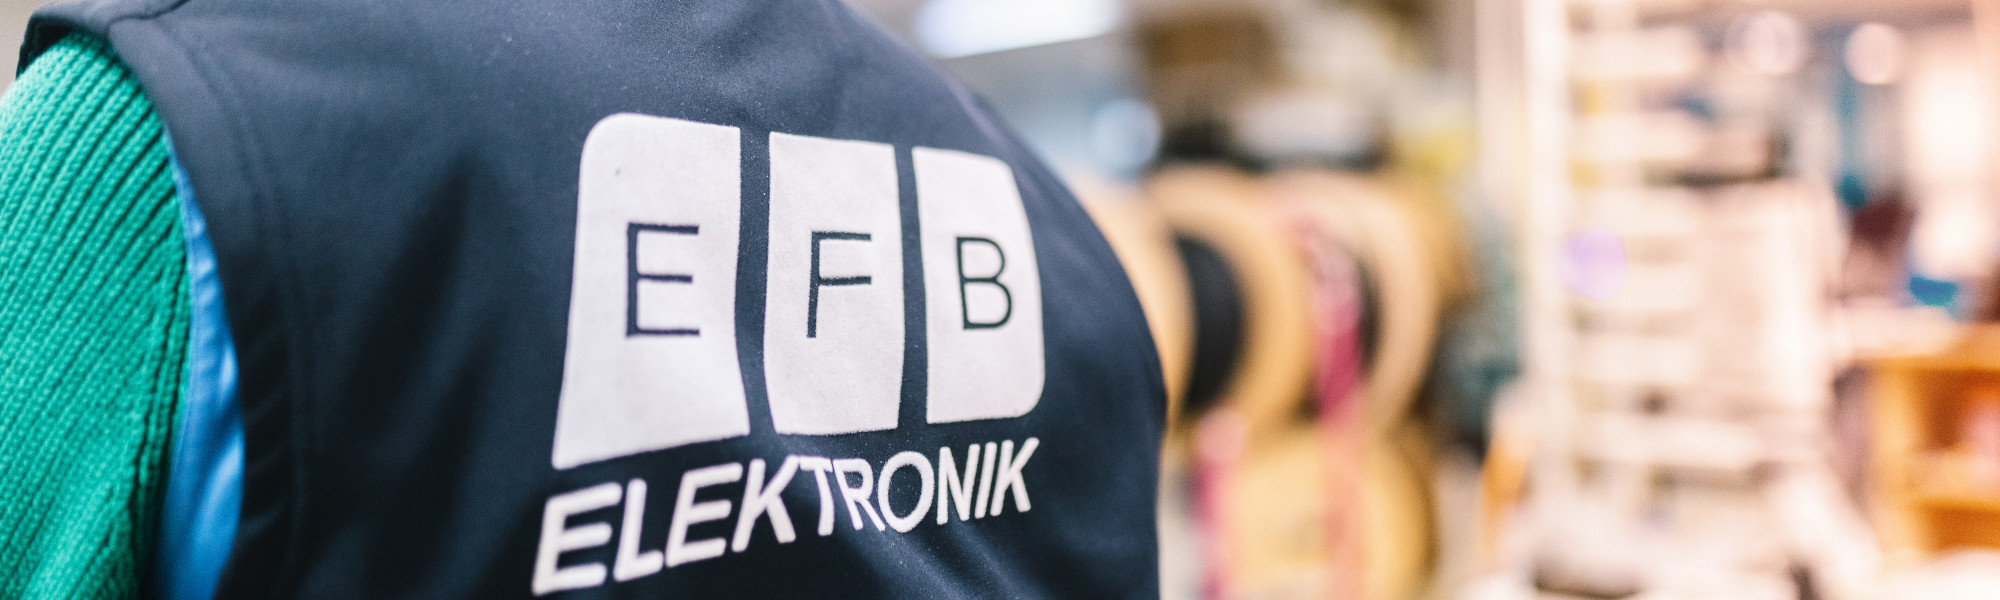 EFB-Elektronik Logo auf Arbeitskleidung, EFB-Elektronik